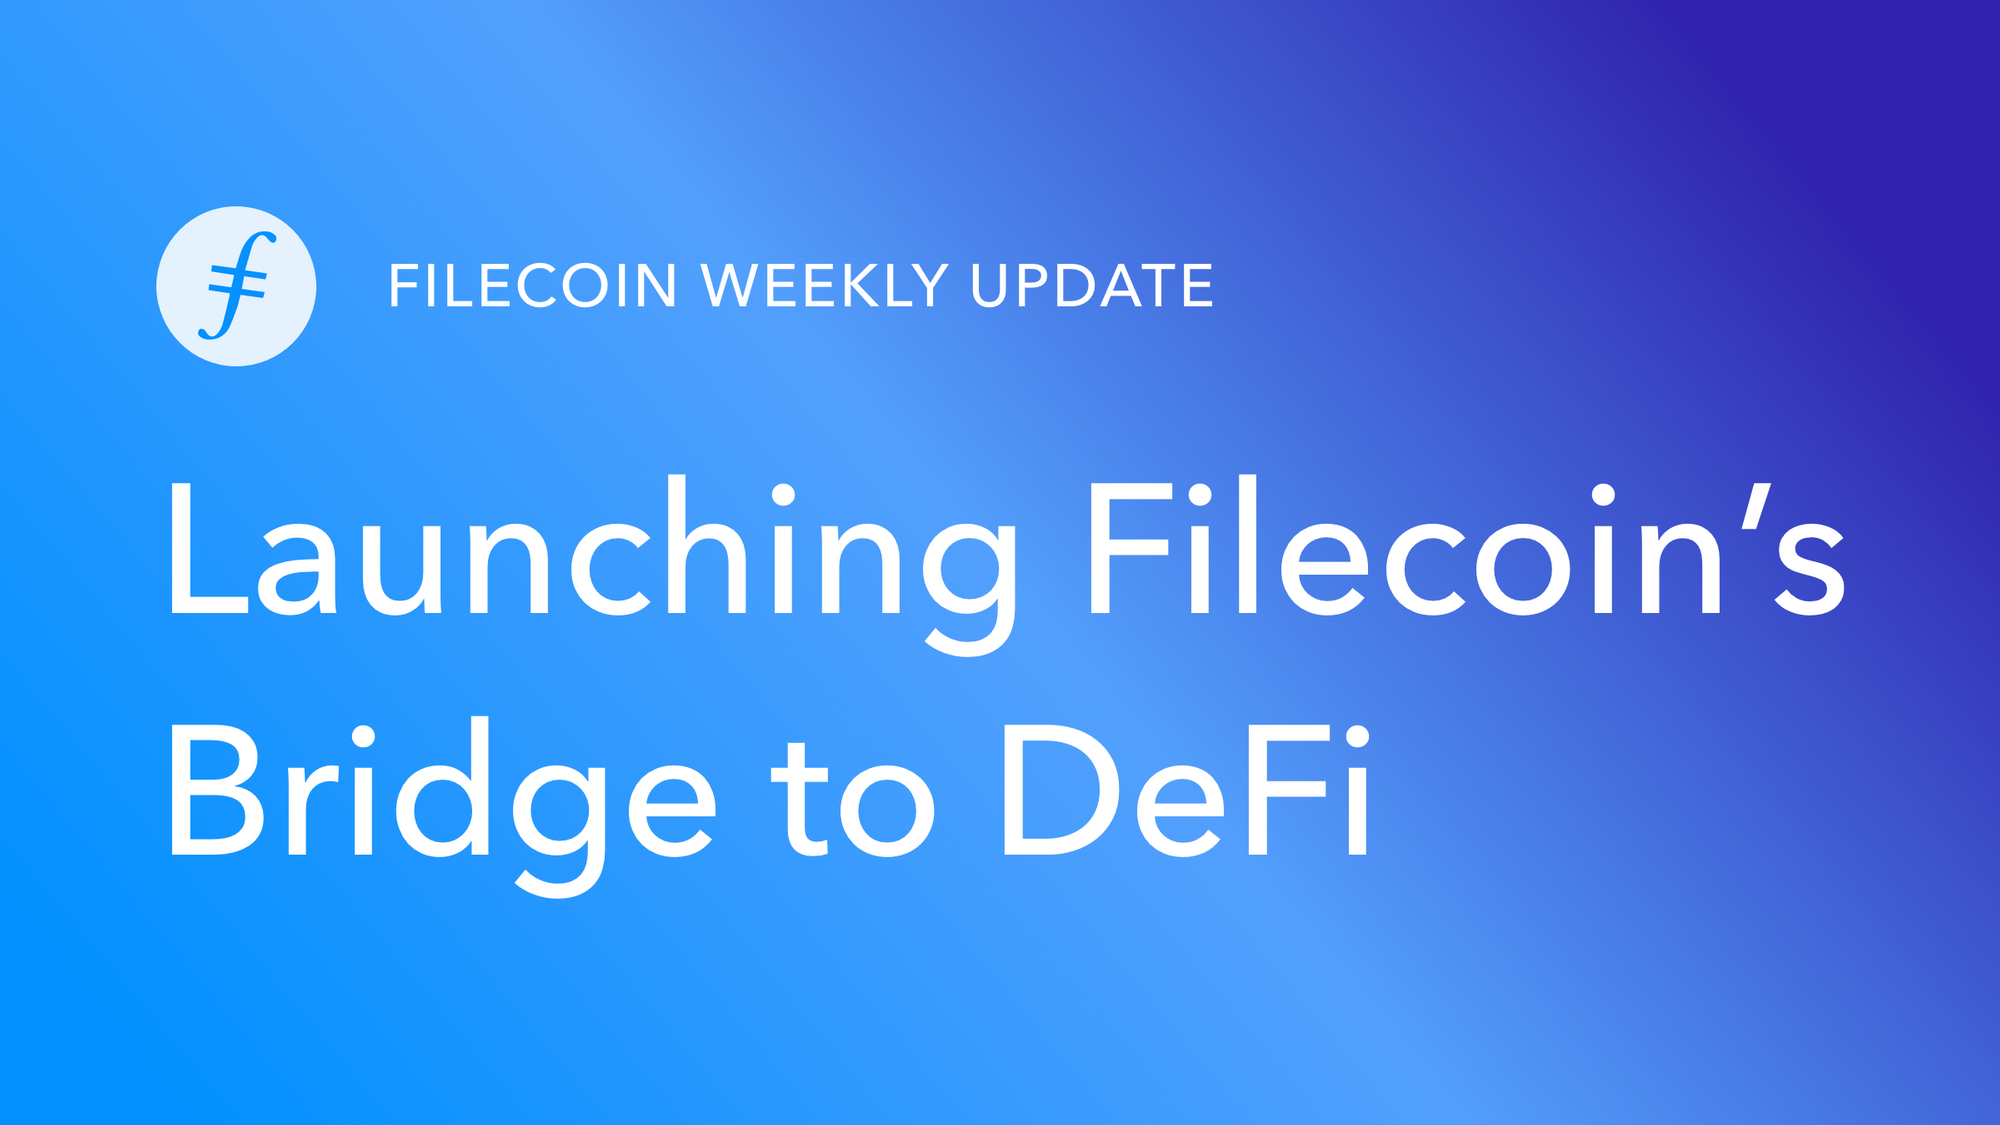 Filecoin Weekly Update: Launching Filecoin’s Bridge to DeFi